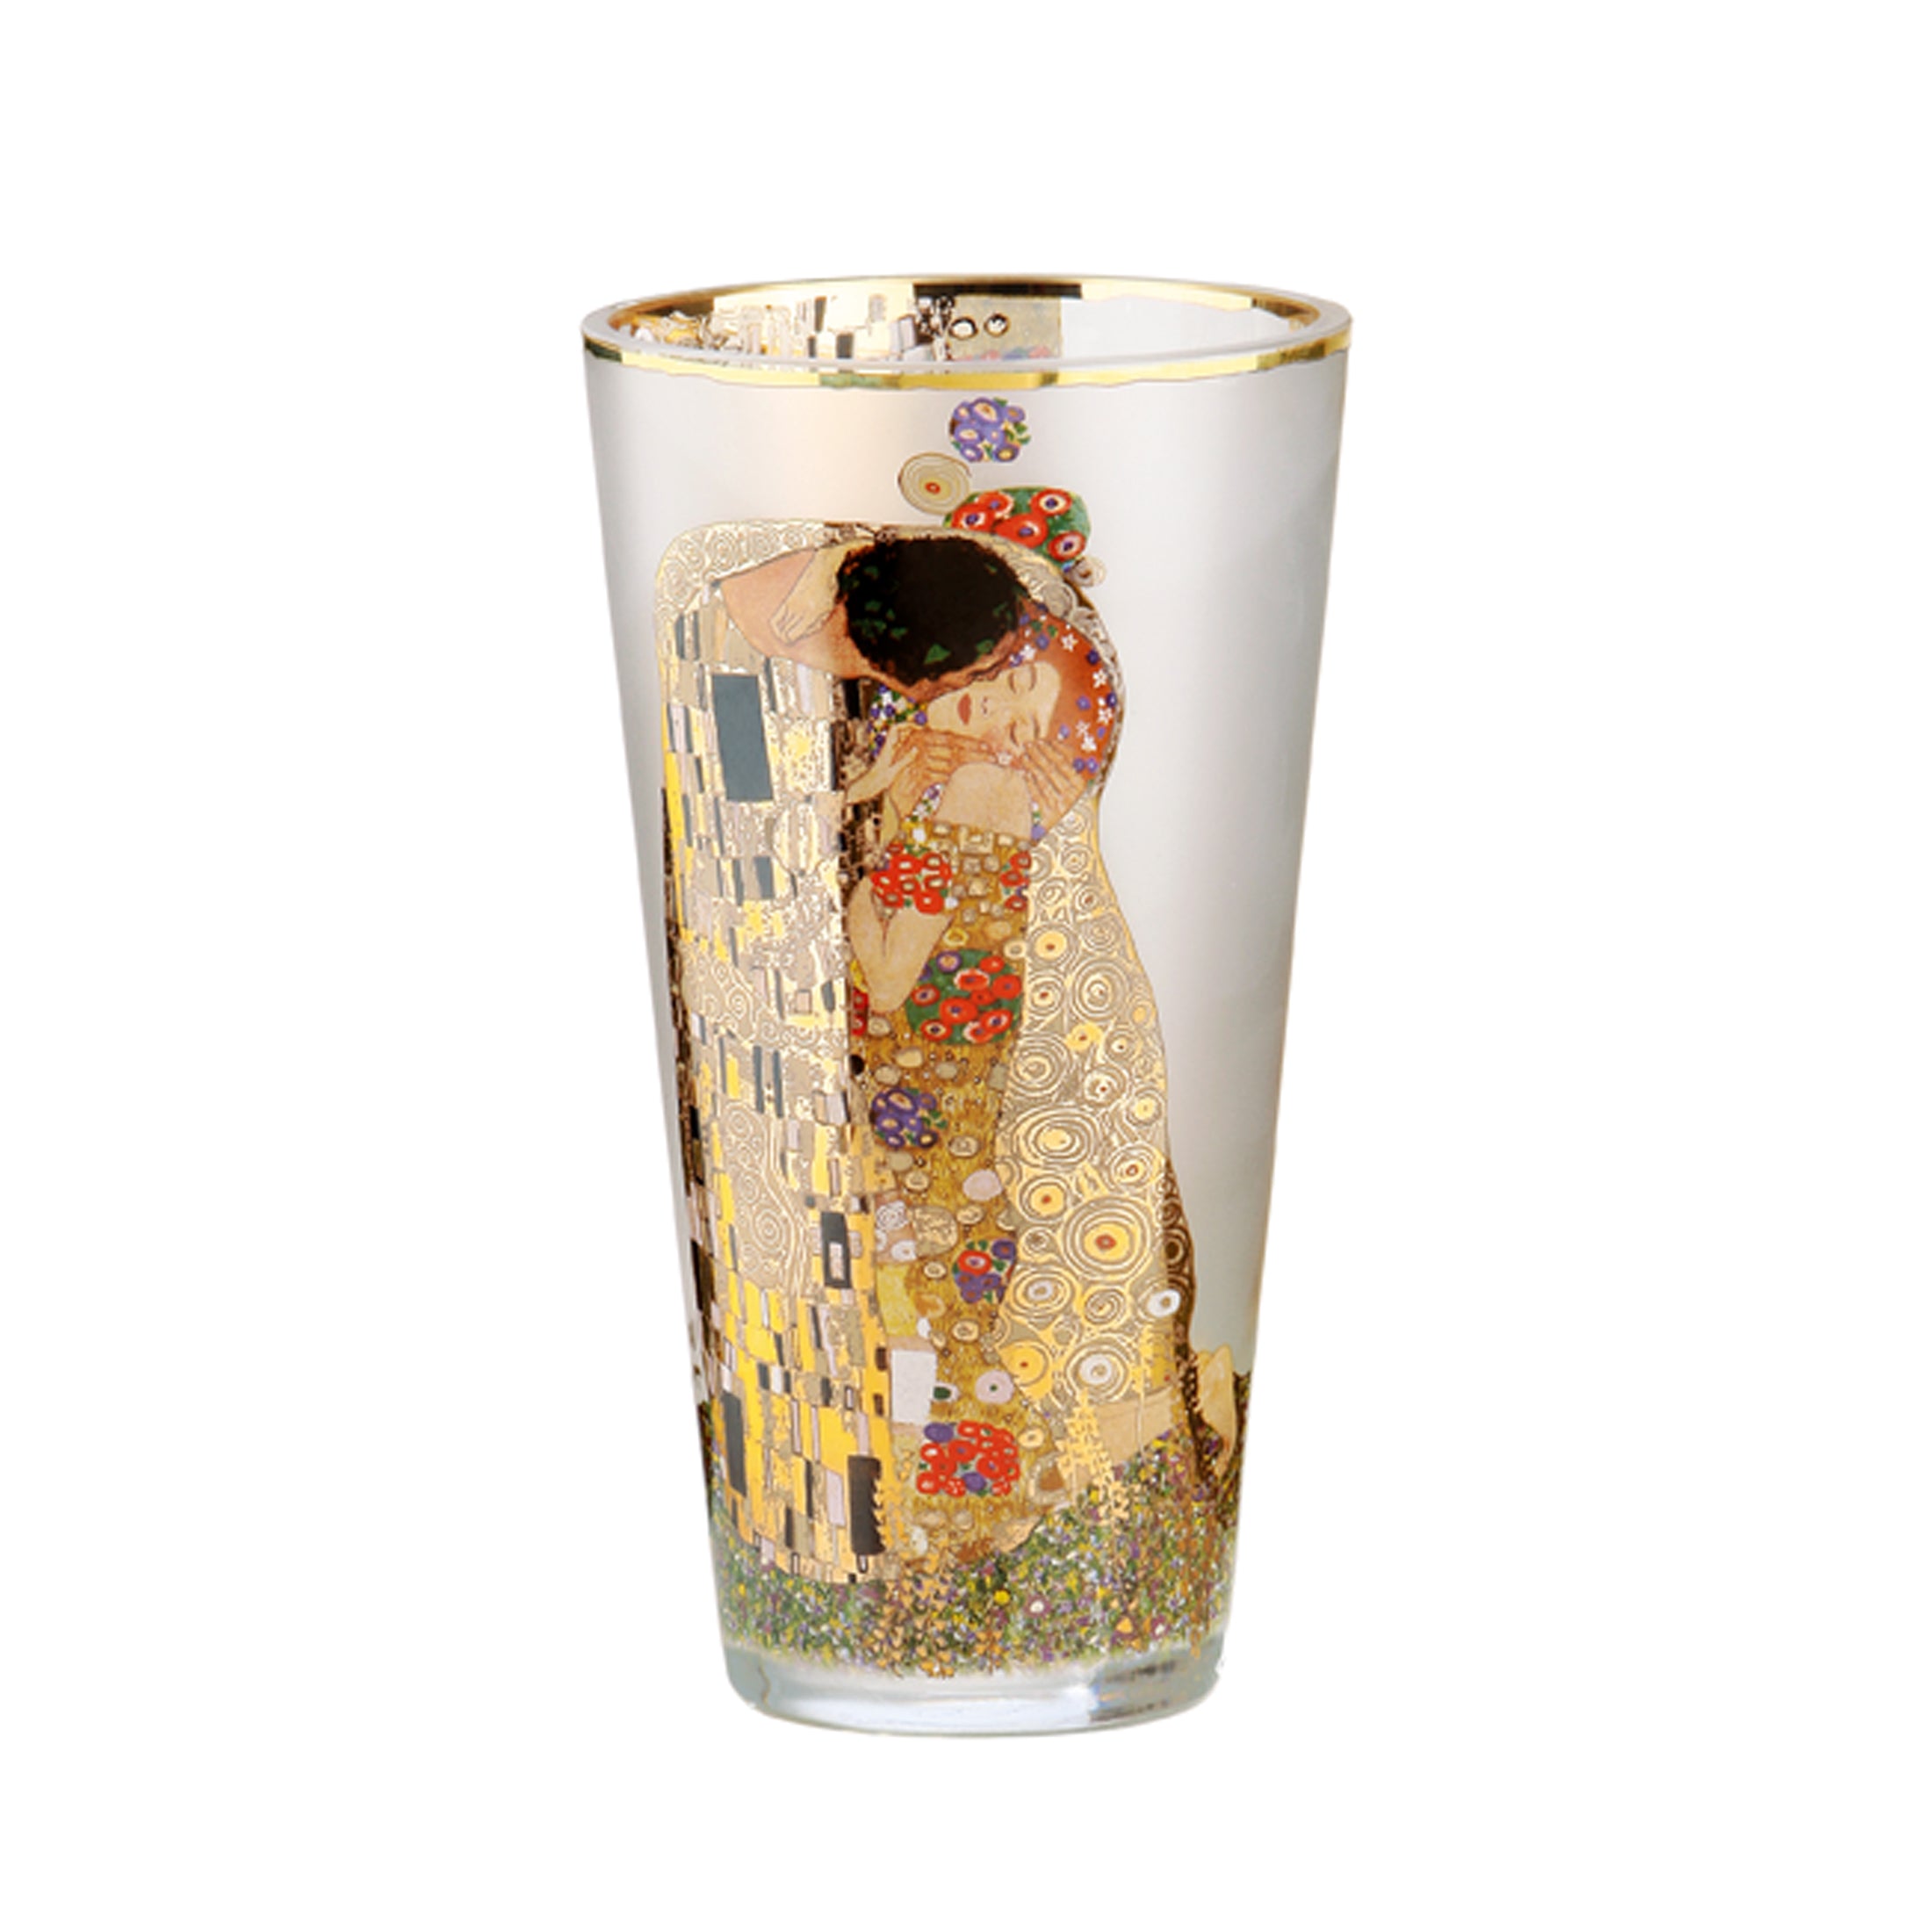 Klimt "The Kiss" vase medium